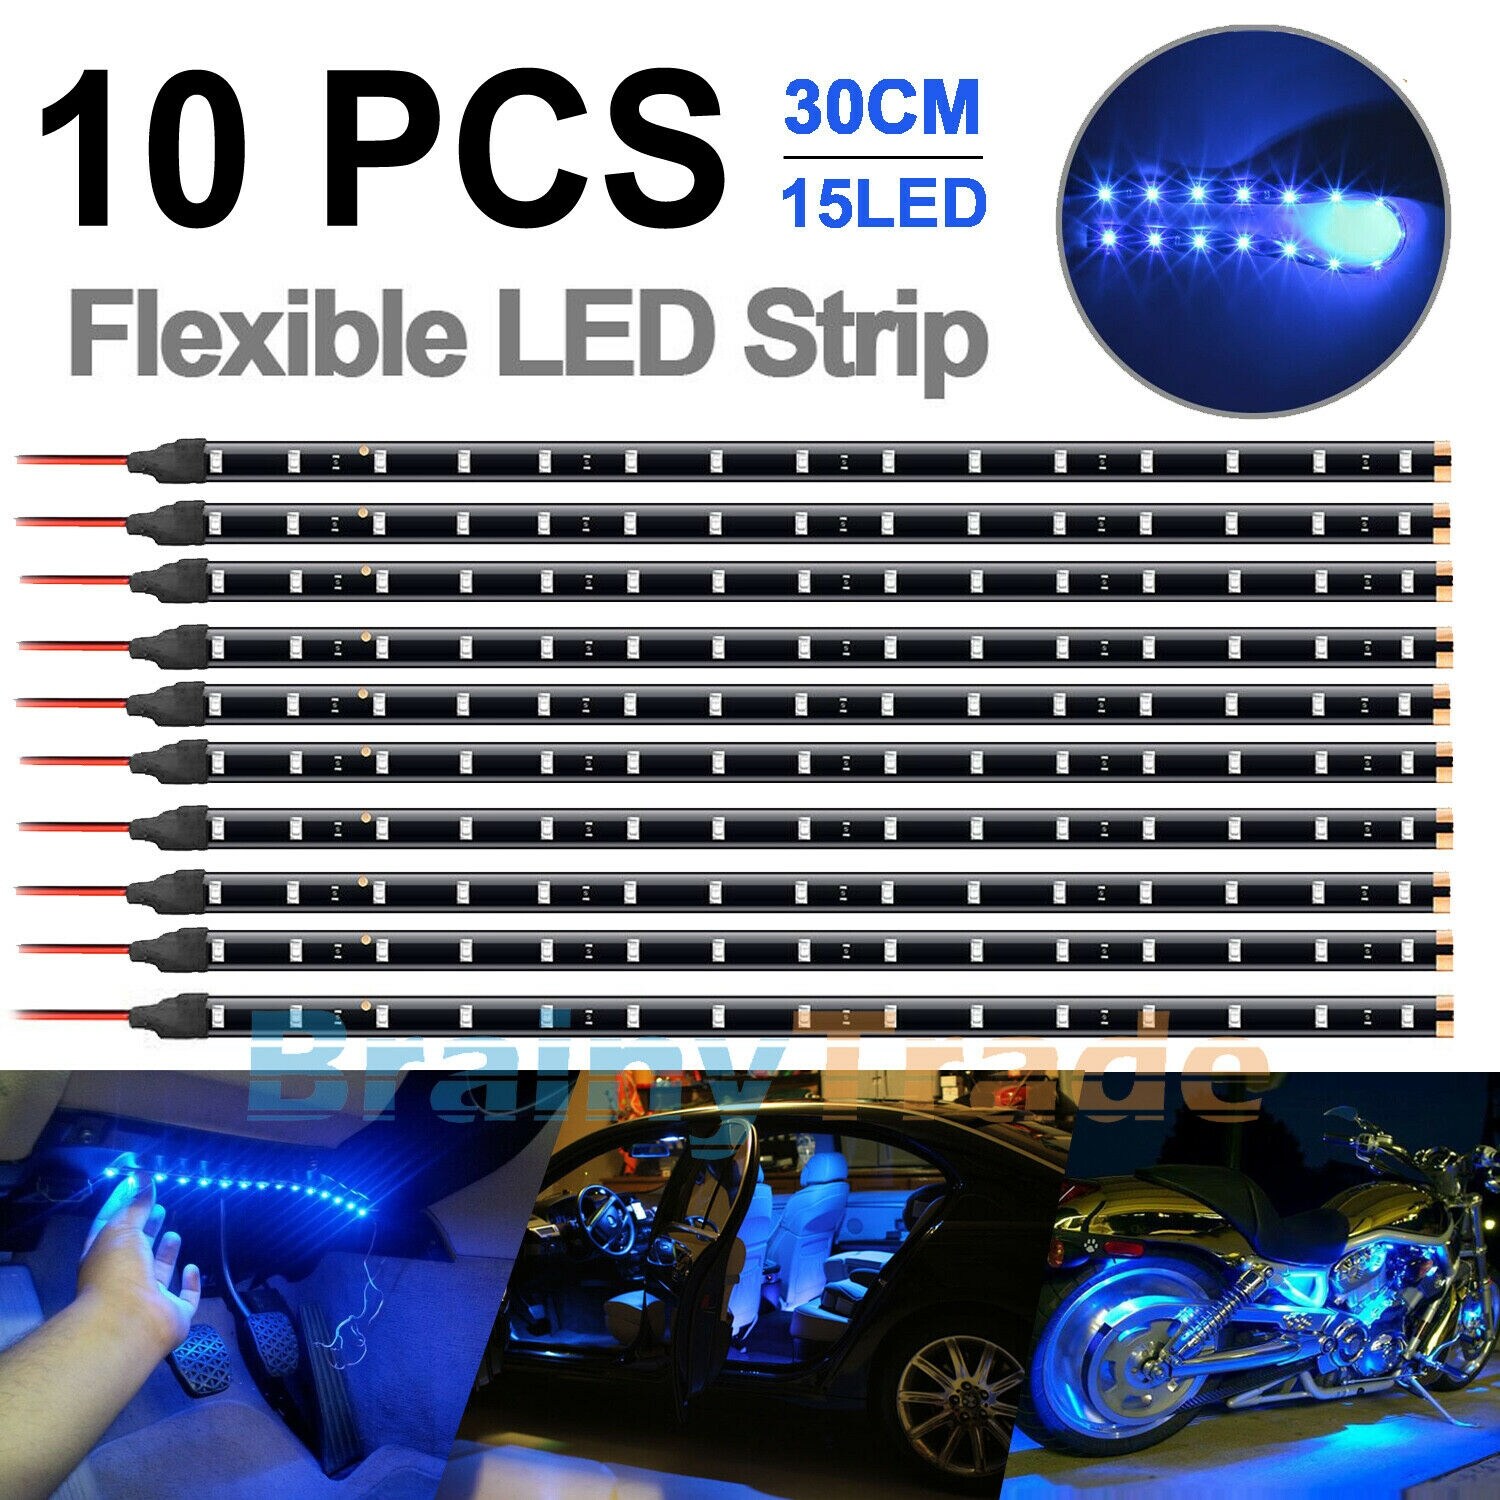 Details about   4x 12" 1FT 15 Flexible LED Strip Light Waterproof For Car Truck Boat 12V Green